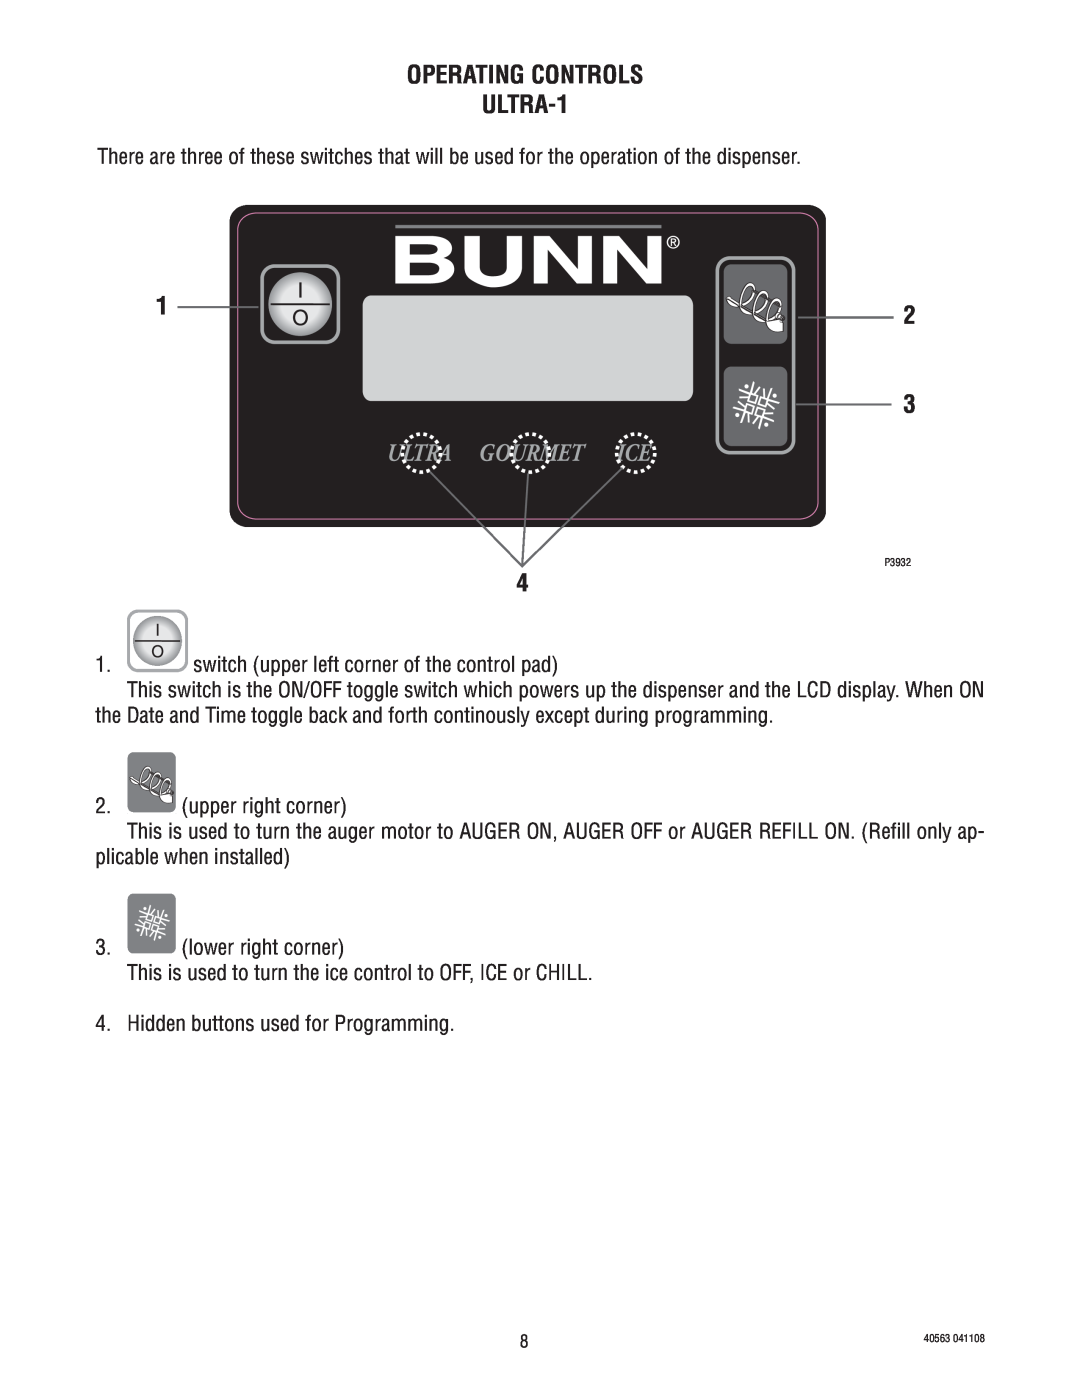 Bunn Ultra 2 service manual OPERATING CONTROLS ULTRA-1 